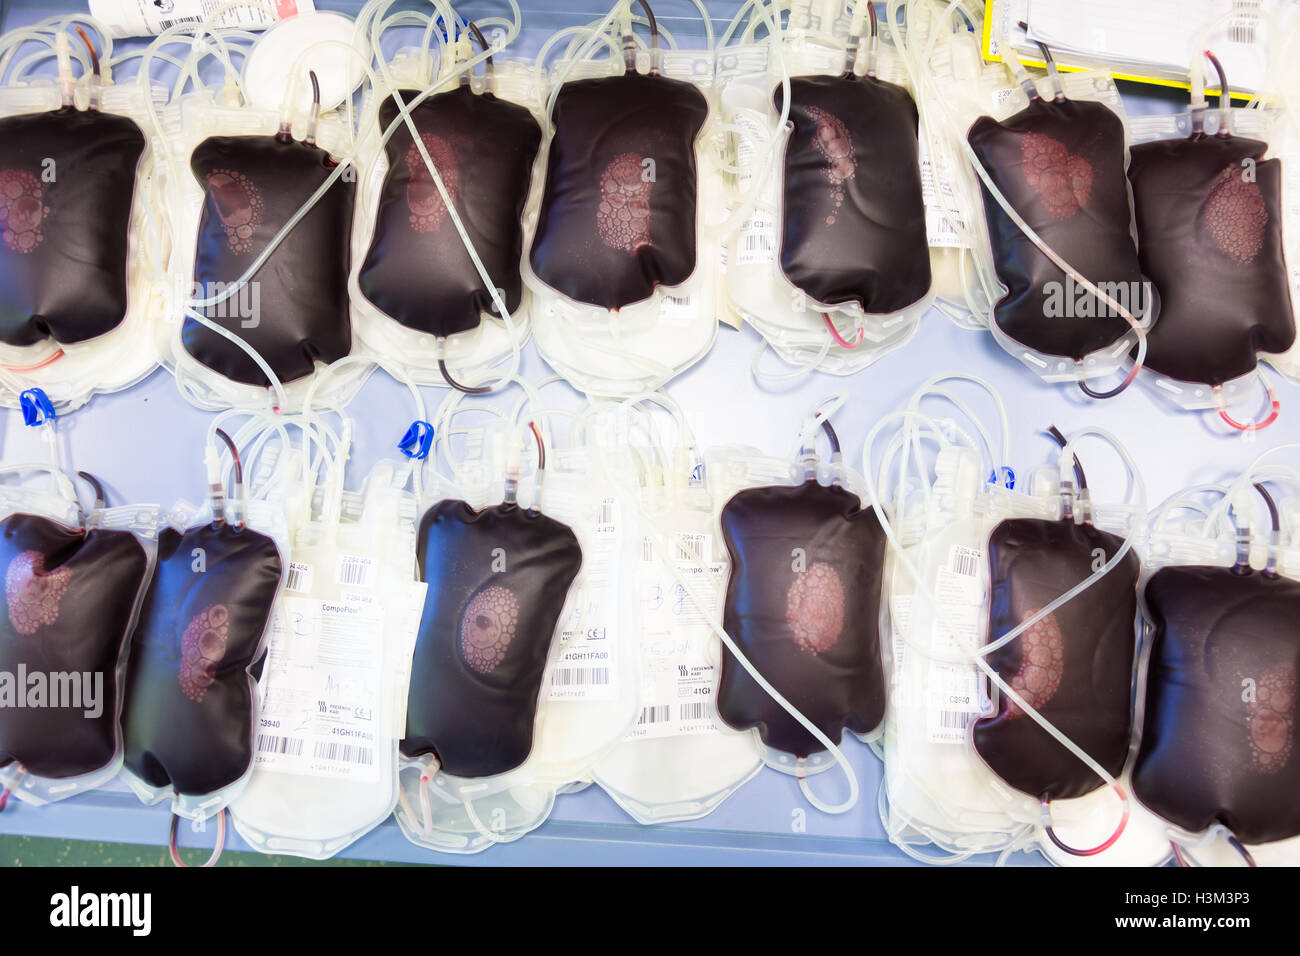 Blood transfusion bags. Stock Photo